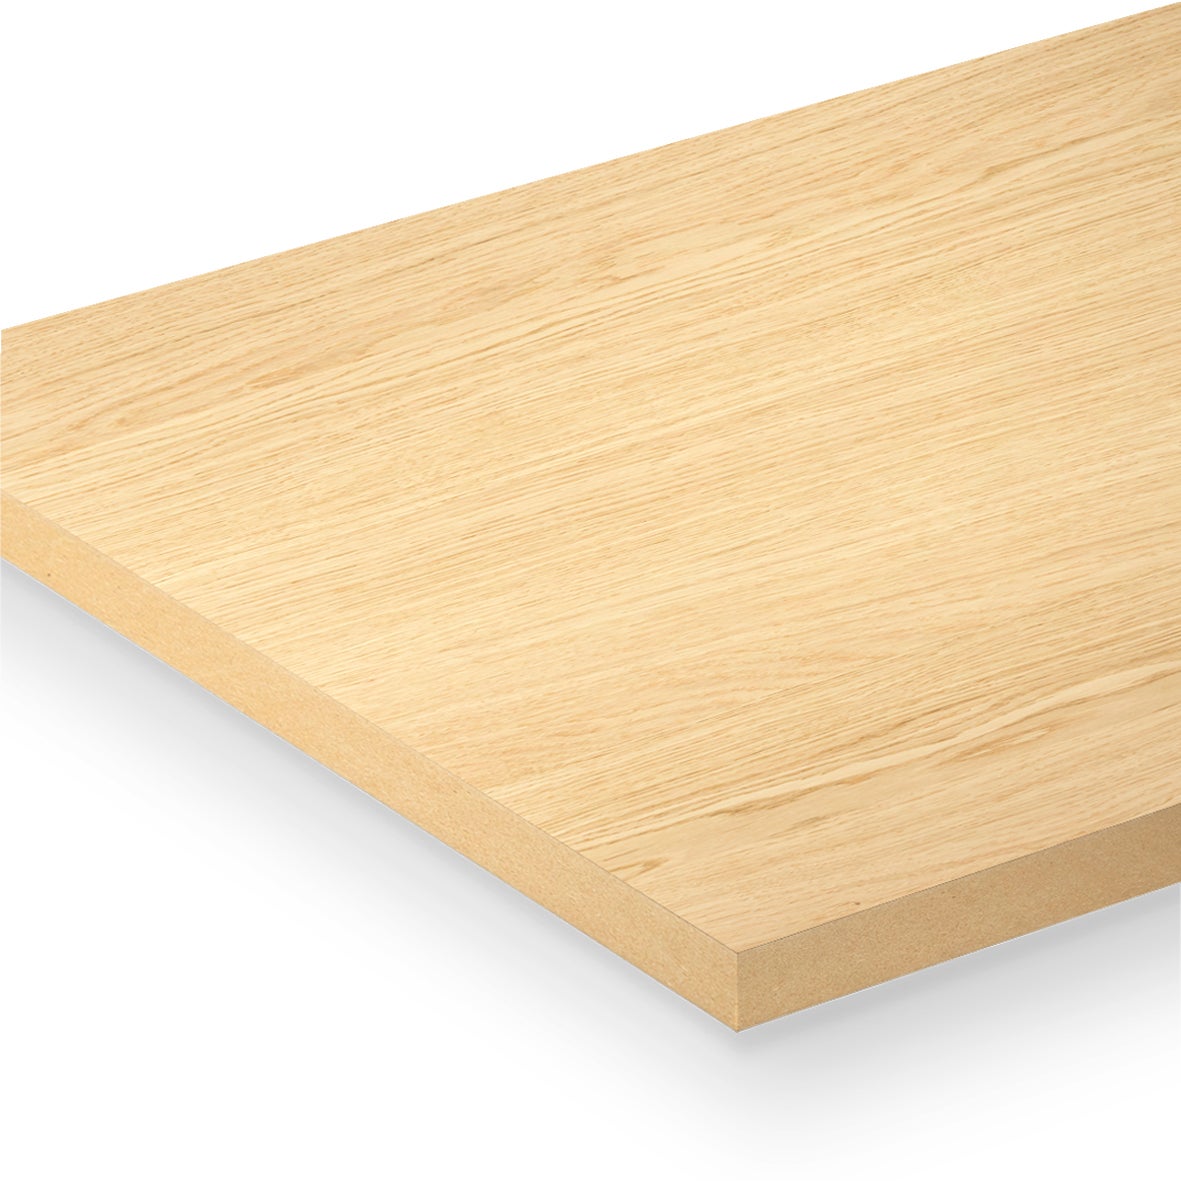 Shinnoki HDF prefinished wood panel